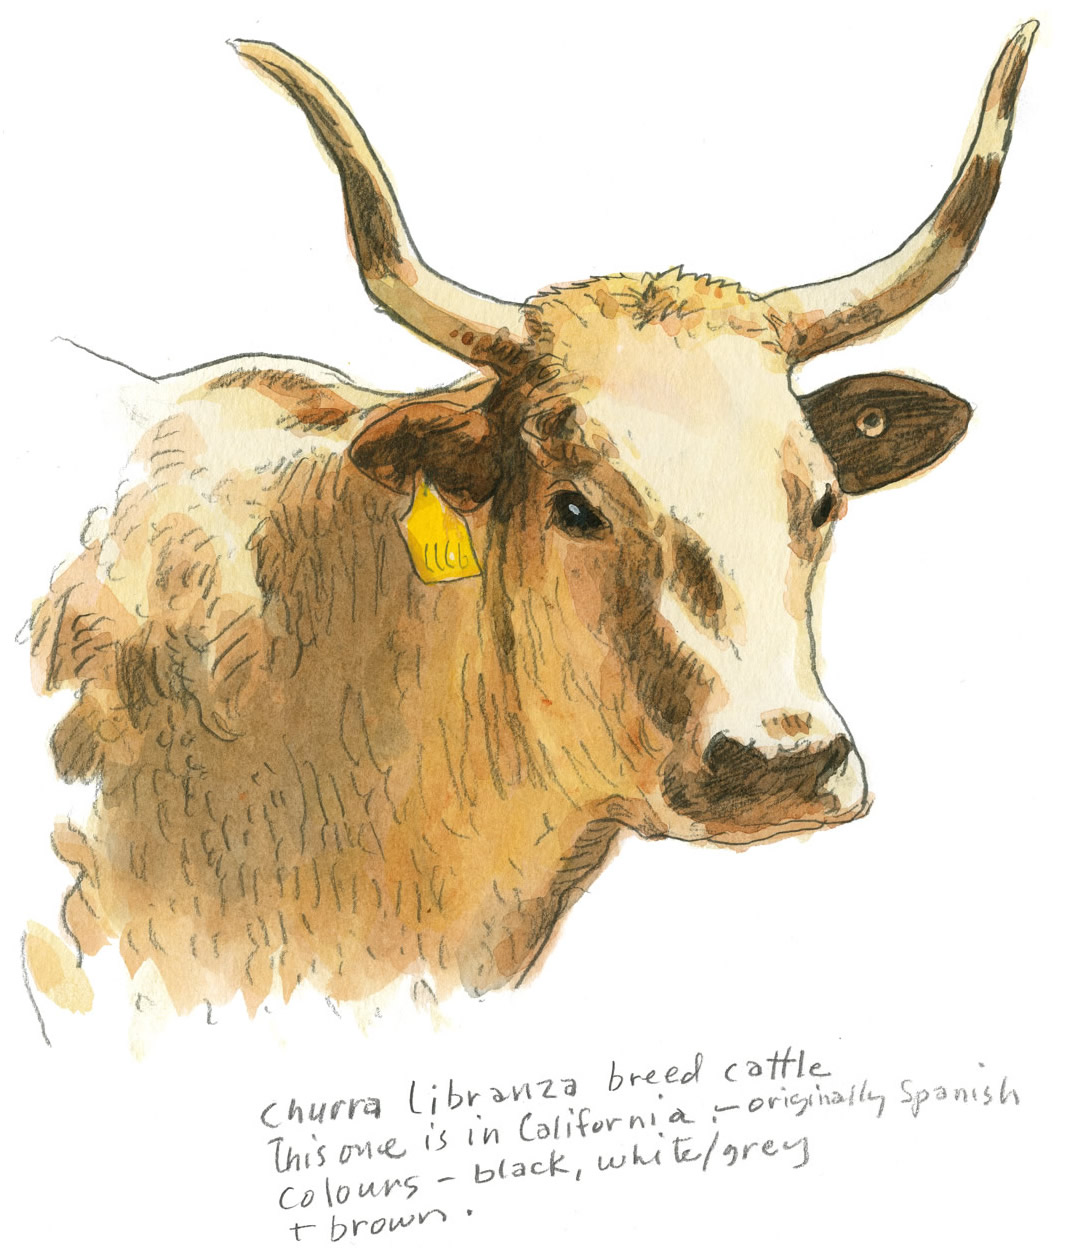 Churra libranza breed cattle